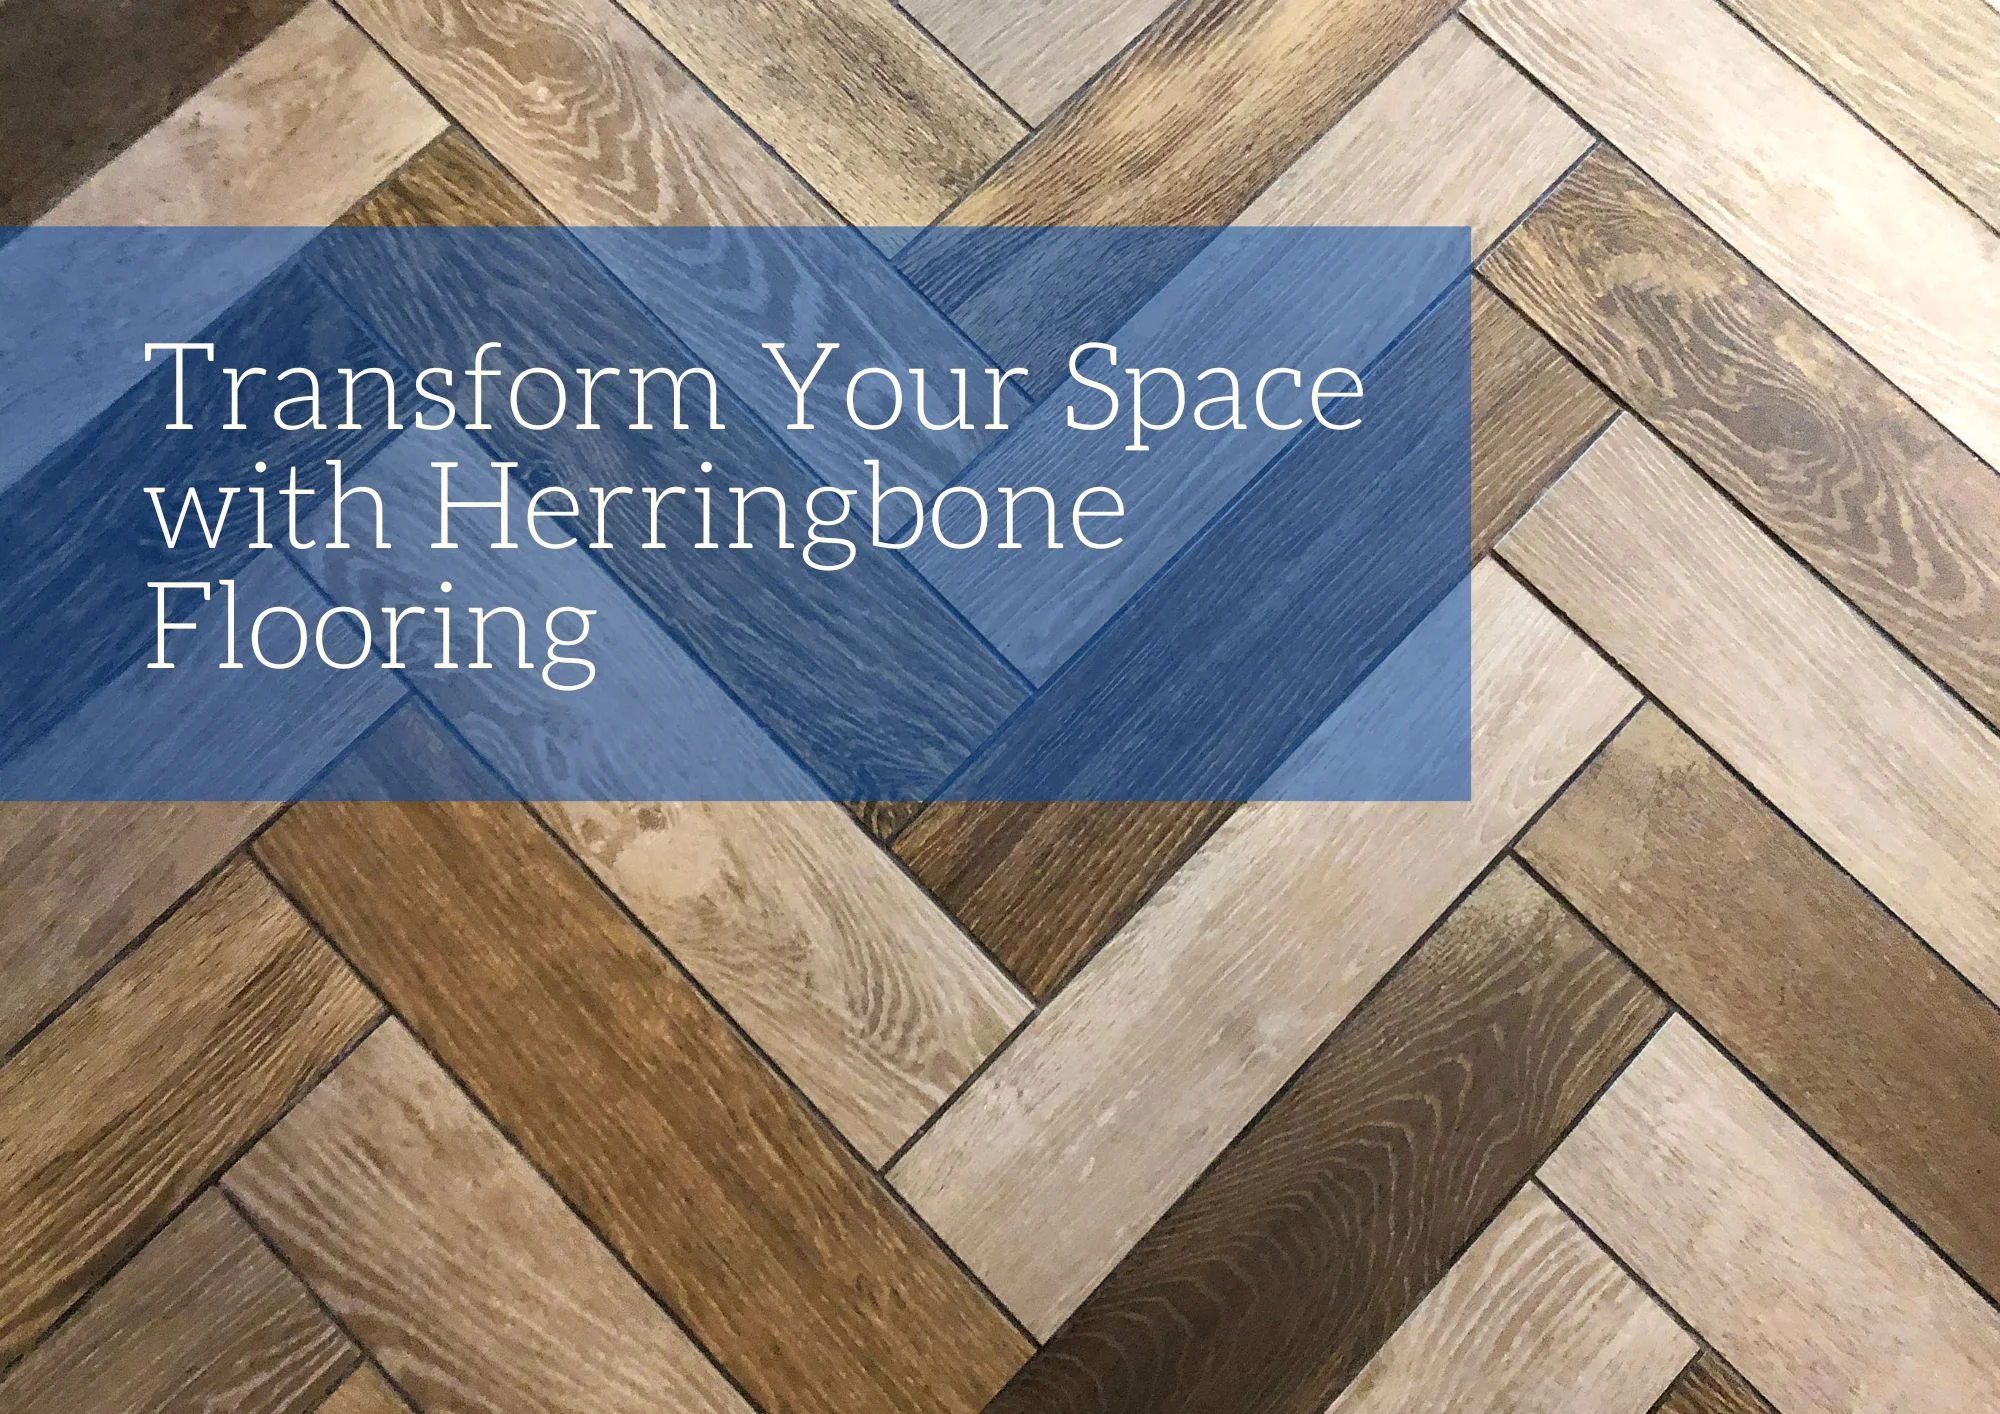 Transform Your Space with Herringbone Flooring